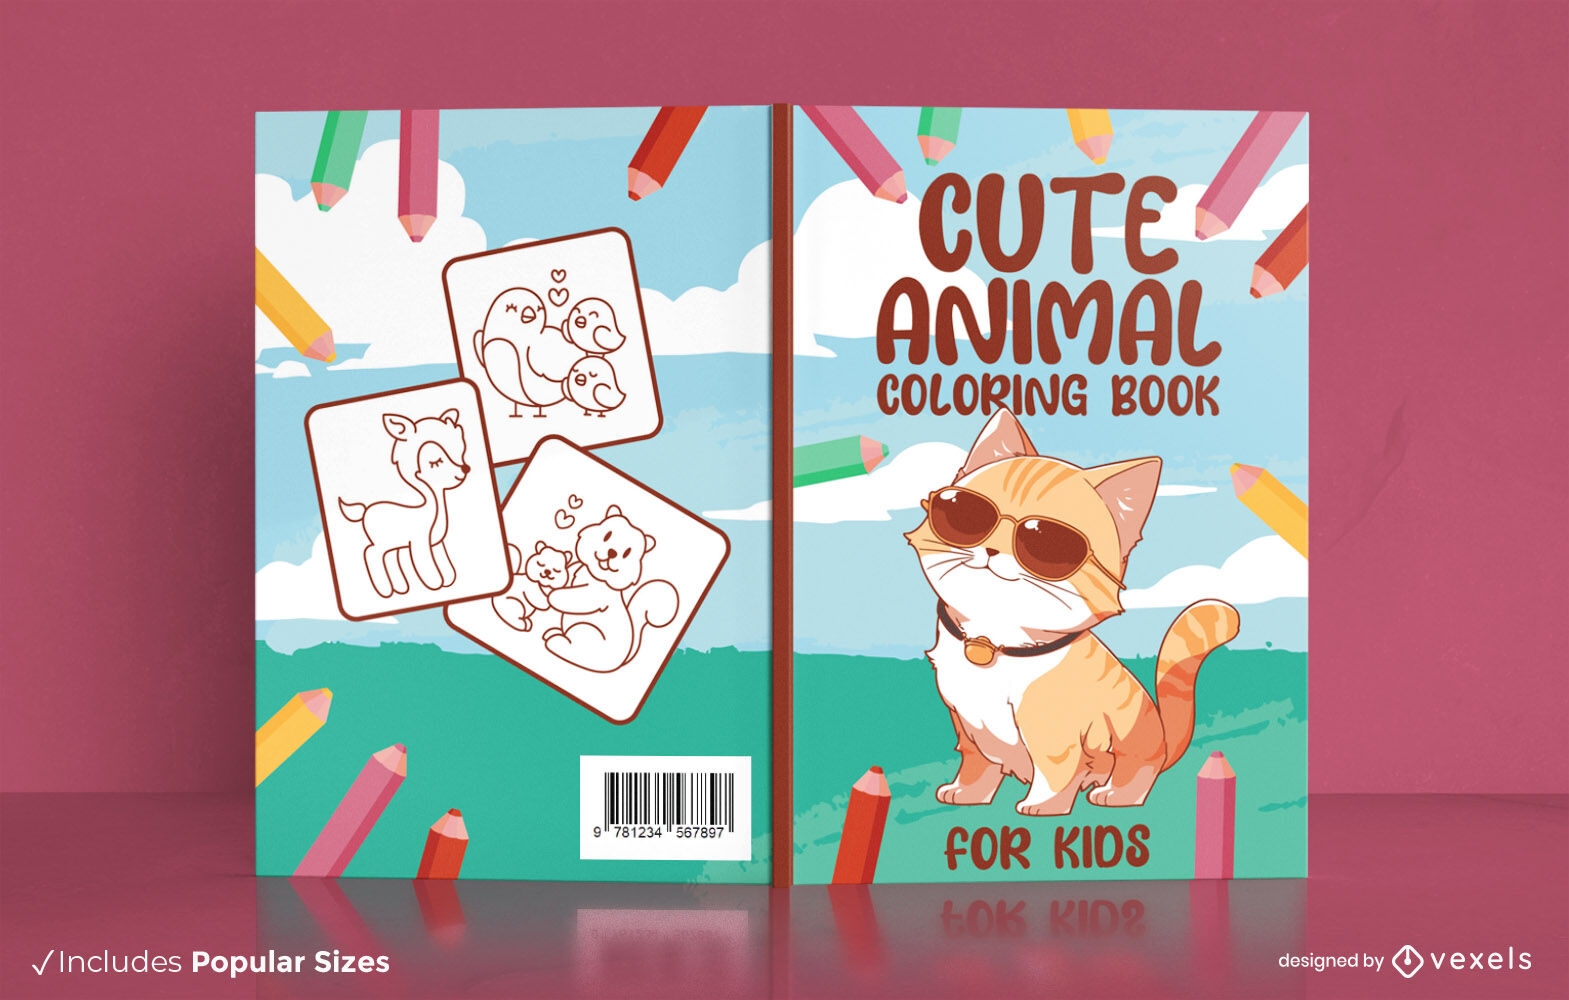 Cute cat coloring book cover design